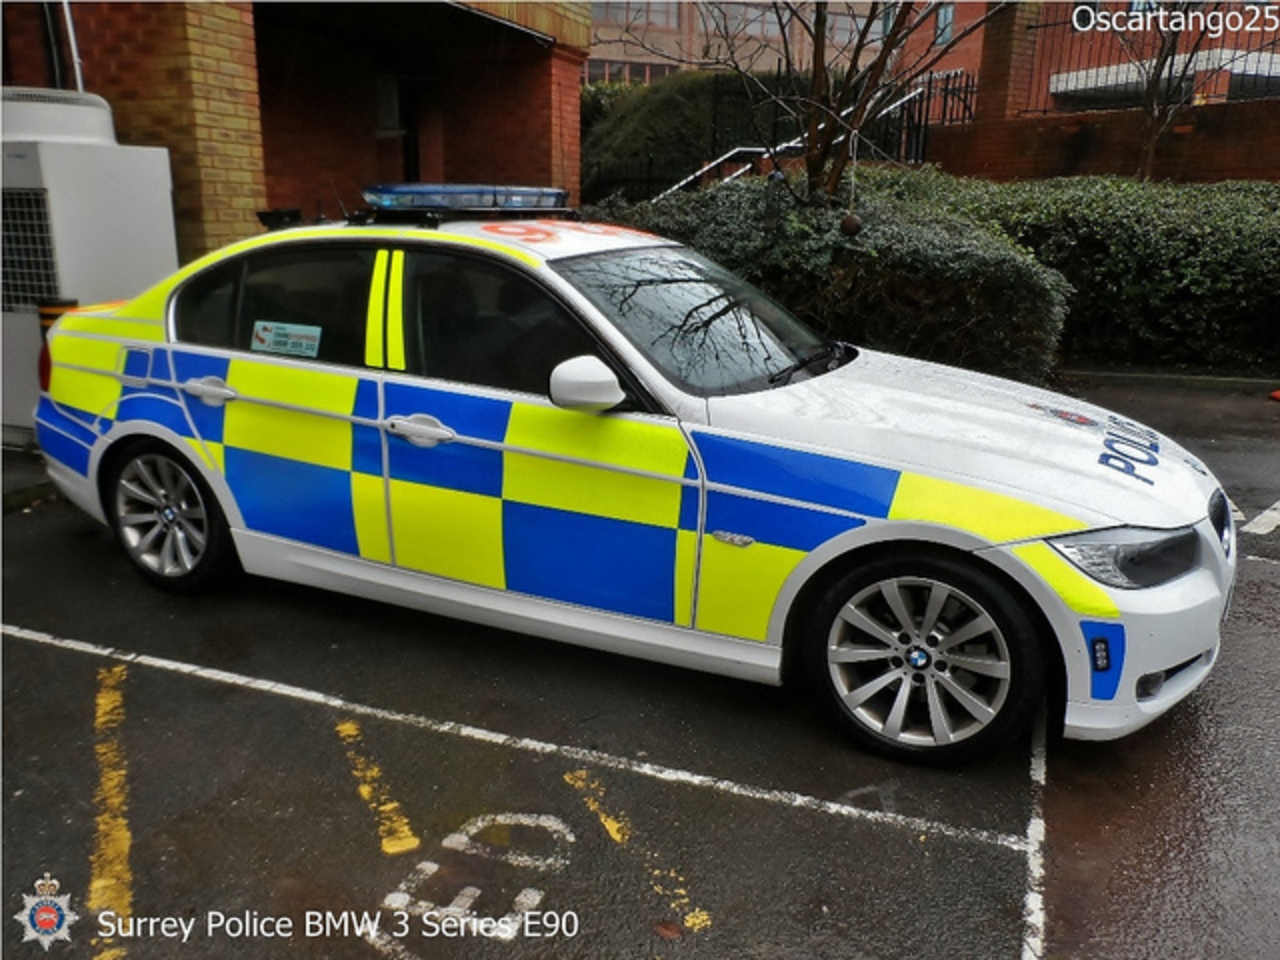 Surrey Police BMW 325 E90 ANPR | Flickr - Photo Sharing!